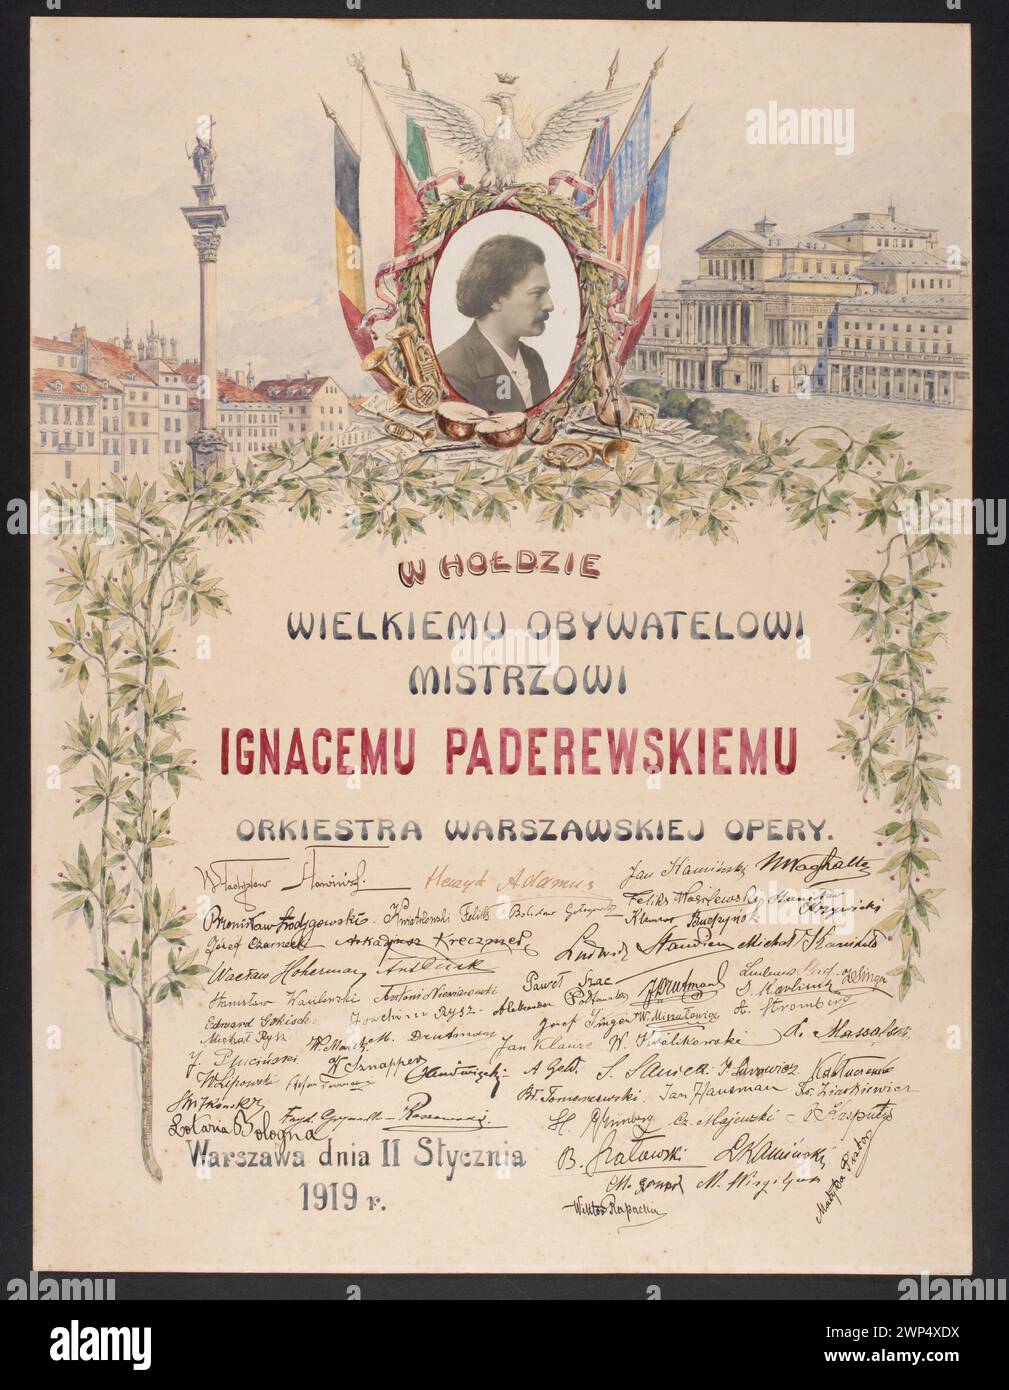 Ho -Downing address for Ignacy Jan Paderewski from the Warsaw Opera orchestra, January 11, 1919; Michrowski, E. (Fl. 1919); 1919 (1919-00-00-1919-00-00);White Eagle (coat of arms - Poland), Paderewski, Ignacy Jan (1860-1941), Paderewski, Ignacy Jan (1860-1941) - iconography, Paderewski, Ignacy Jan (1860-1941) - collection, Old Miasto (Warsaw), Wielki Theater (Warsaw), Warsaw (Masovian Voivodeship), Holdowning addresses, gift (provenance), diplomas, musical instruments, column of Zygmunt III Vasa (Warsaw), musicians, opera (artist), orchestras, Zamkowy Square (Warsaw), monuments, Theater (artis Stock Photo